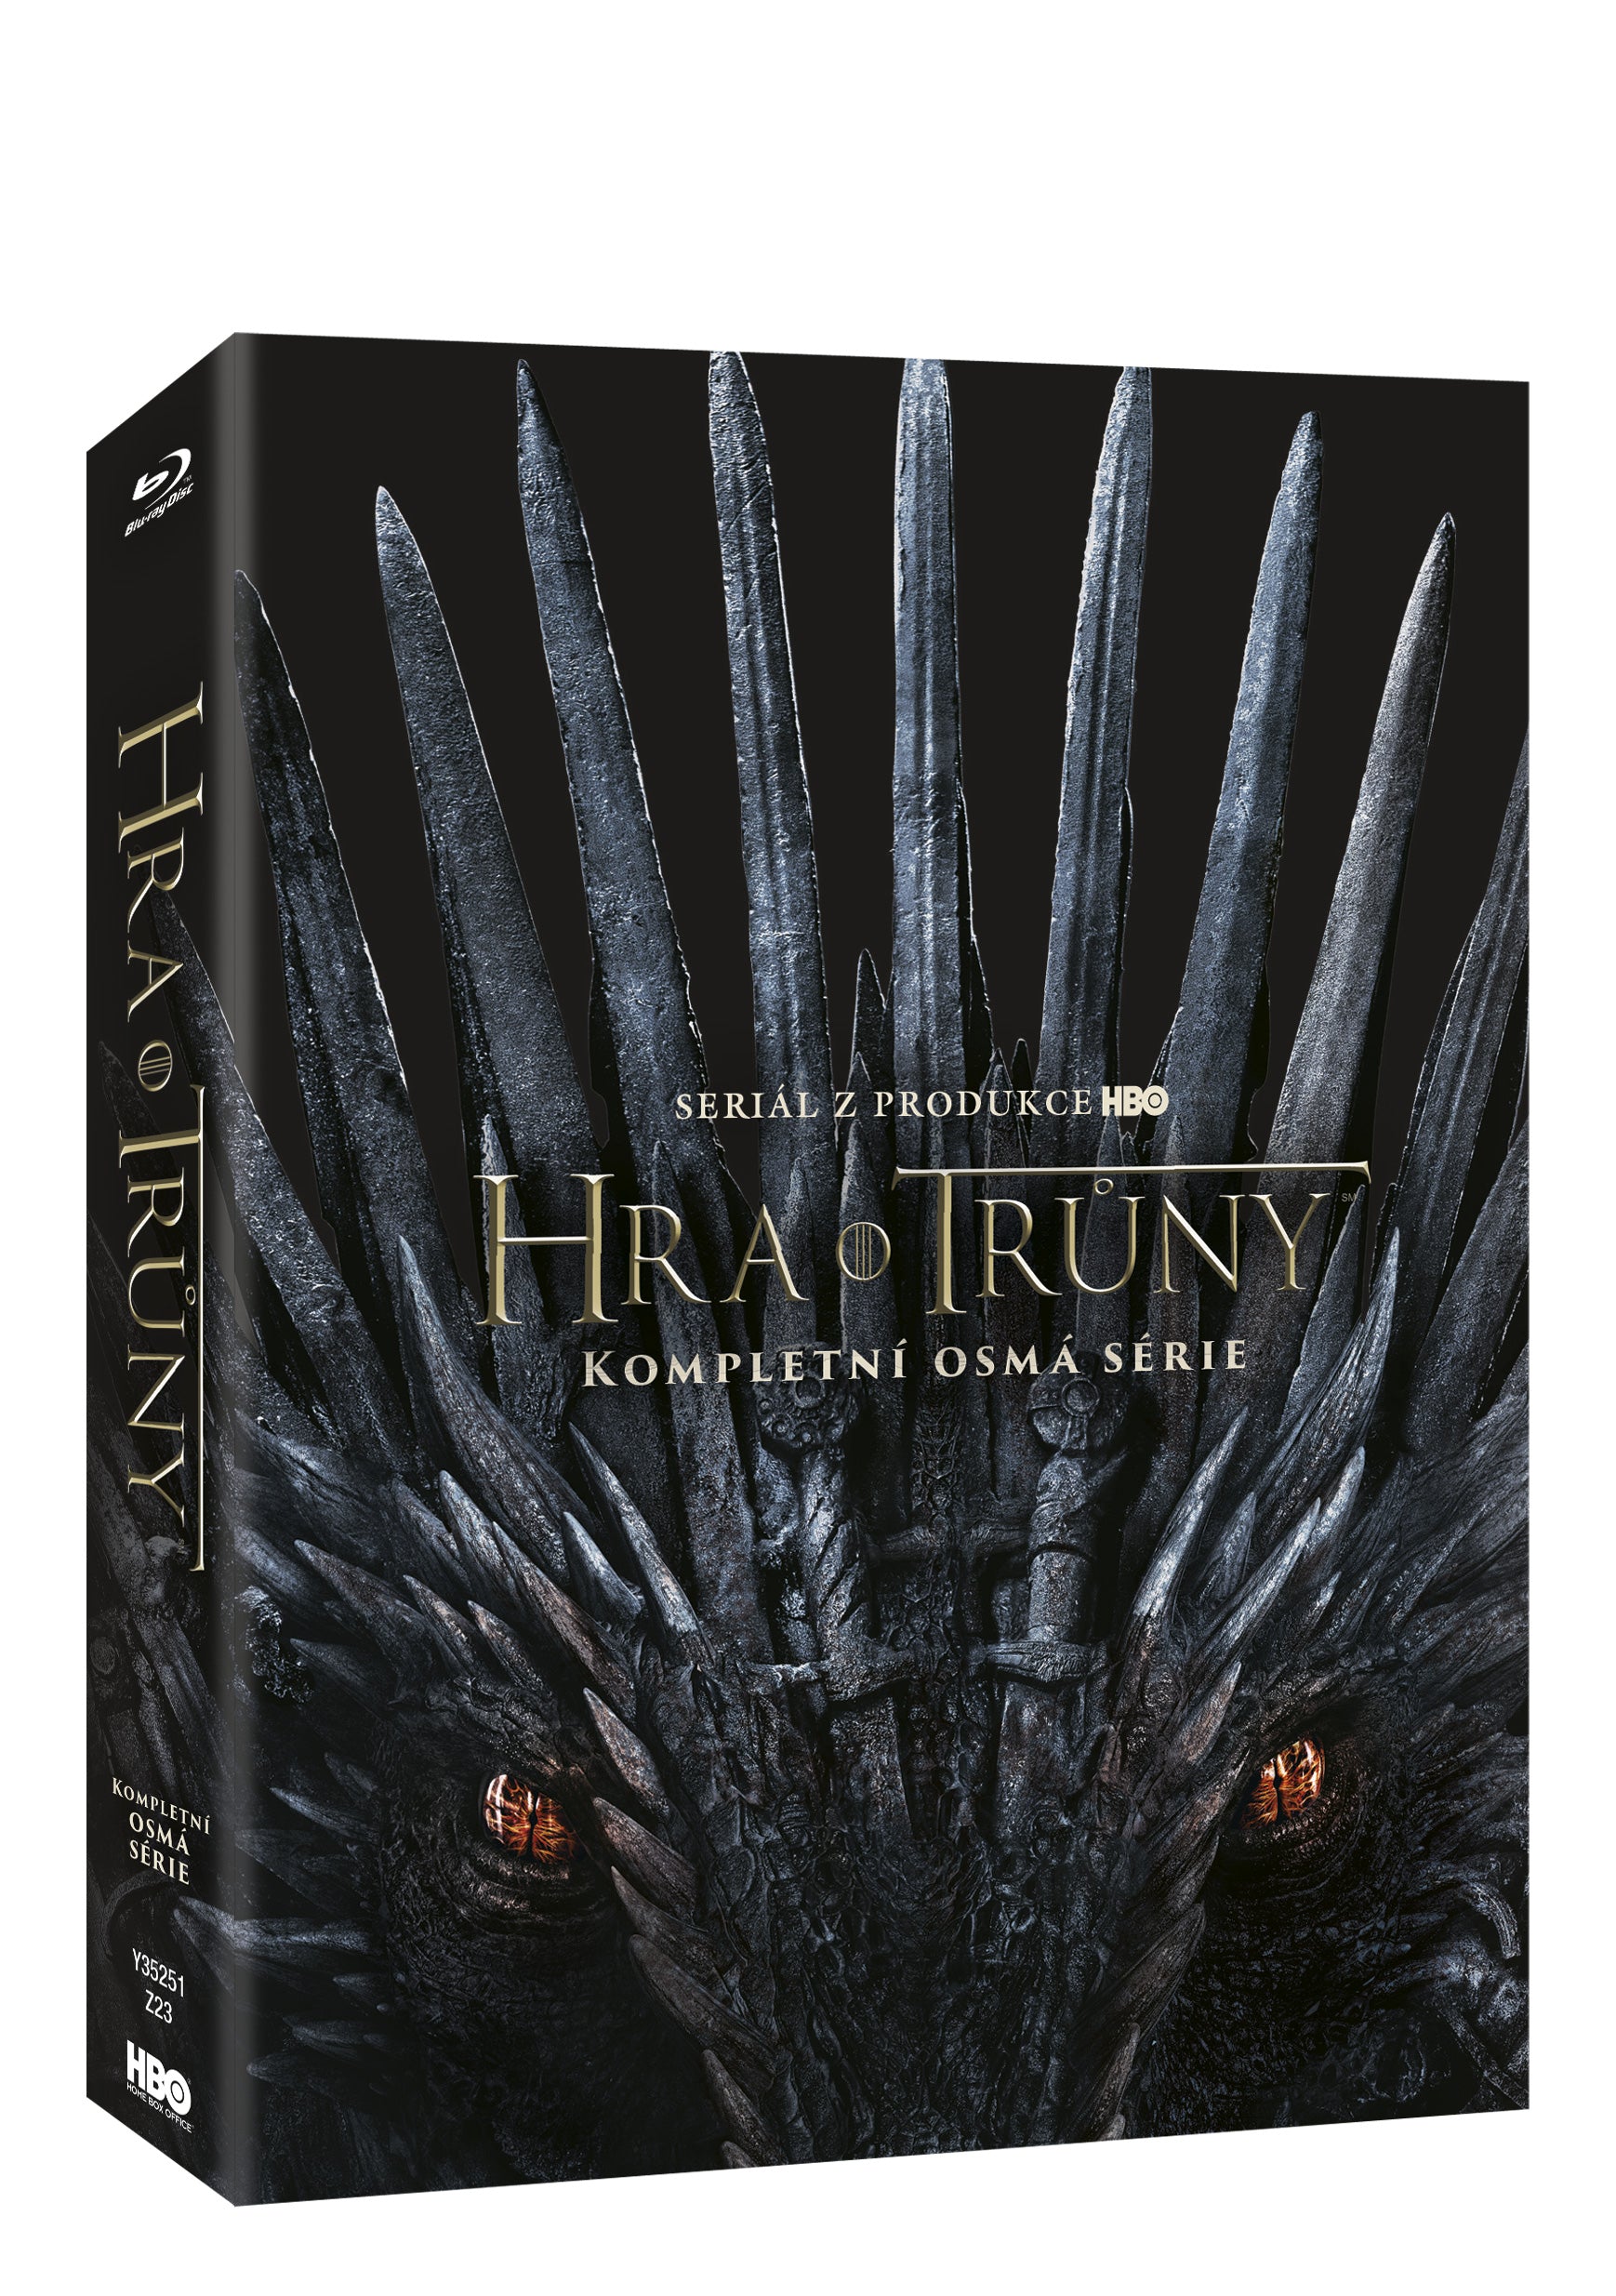 Hra o truny 8. serie 3BD / Game of Thrones Season 8 3BD - Czech version